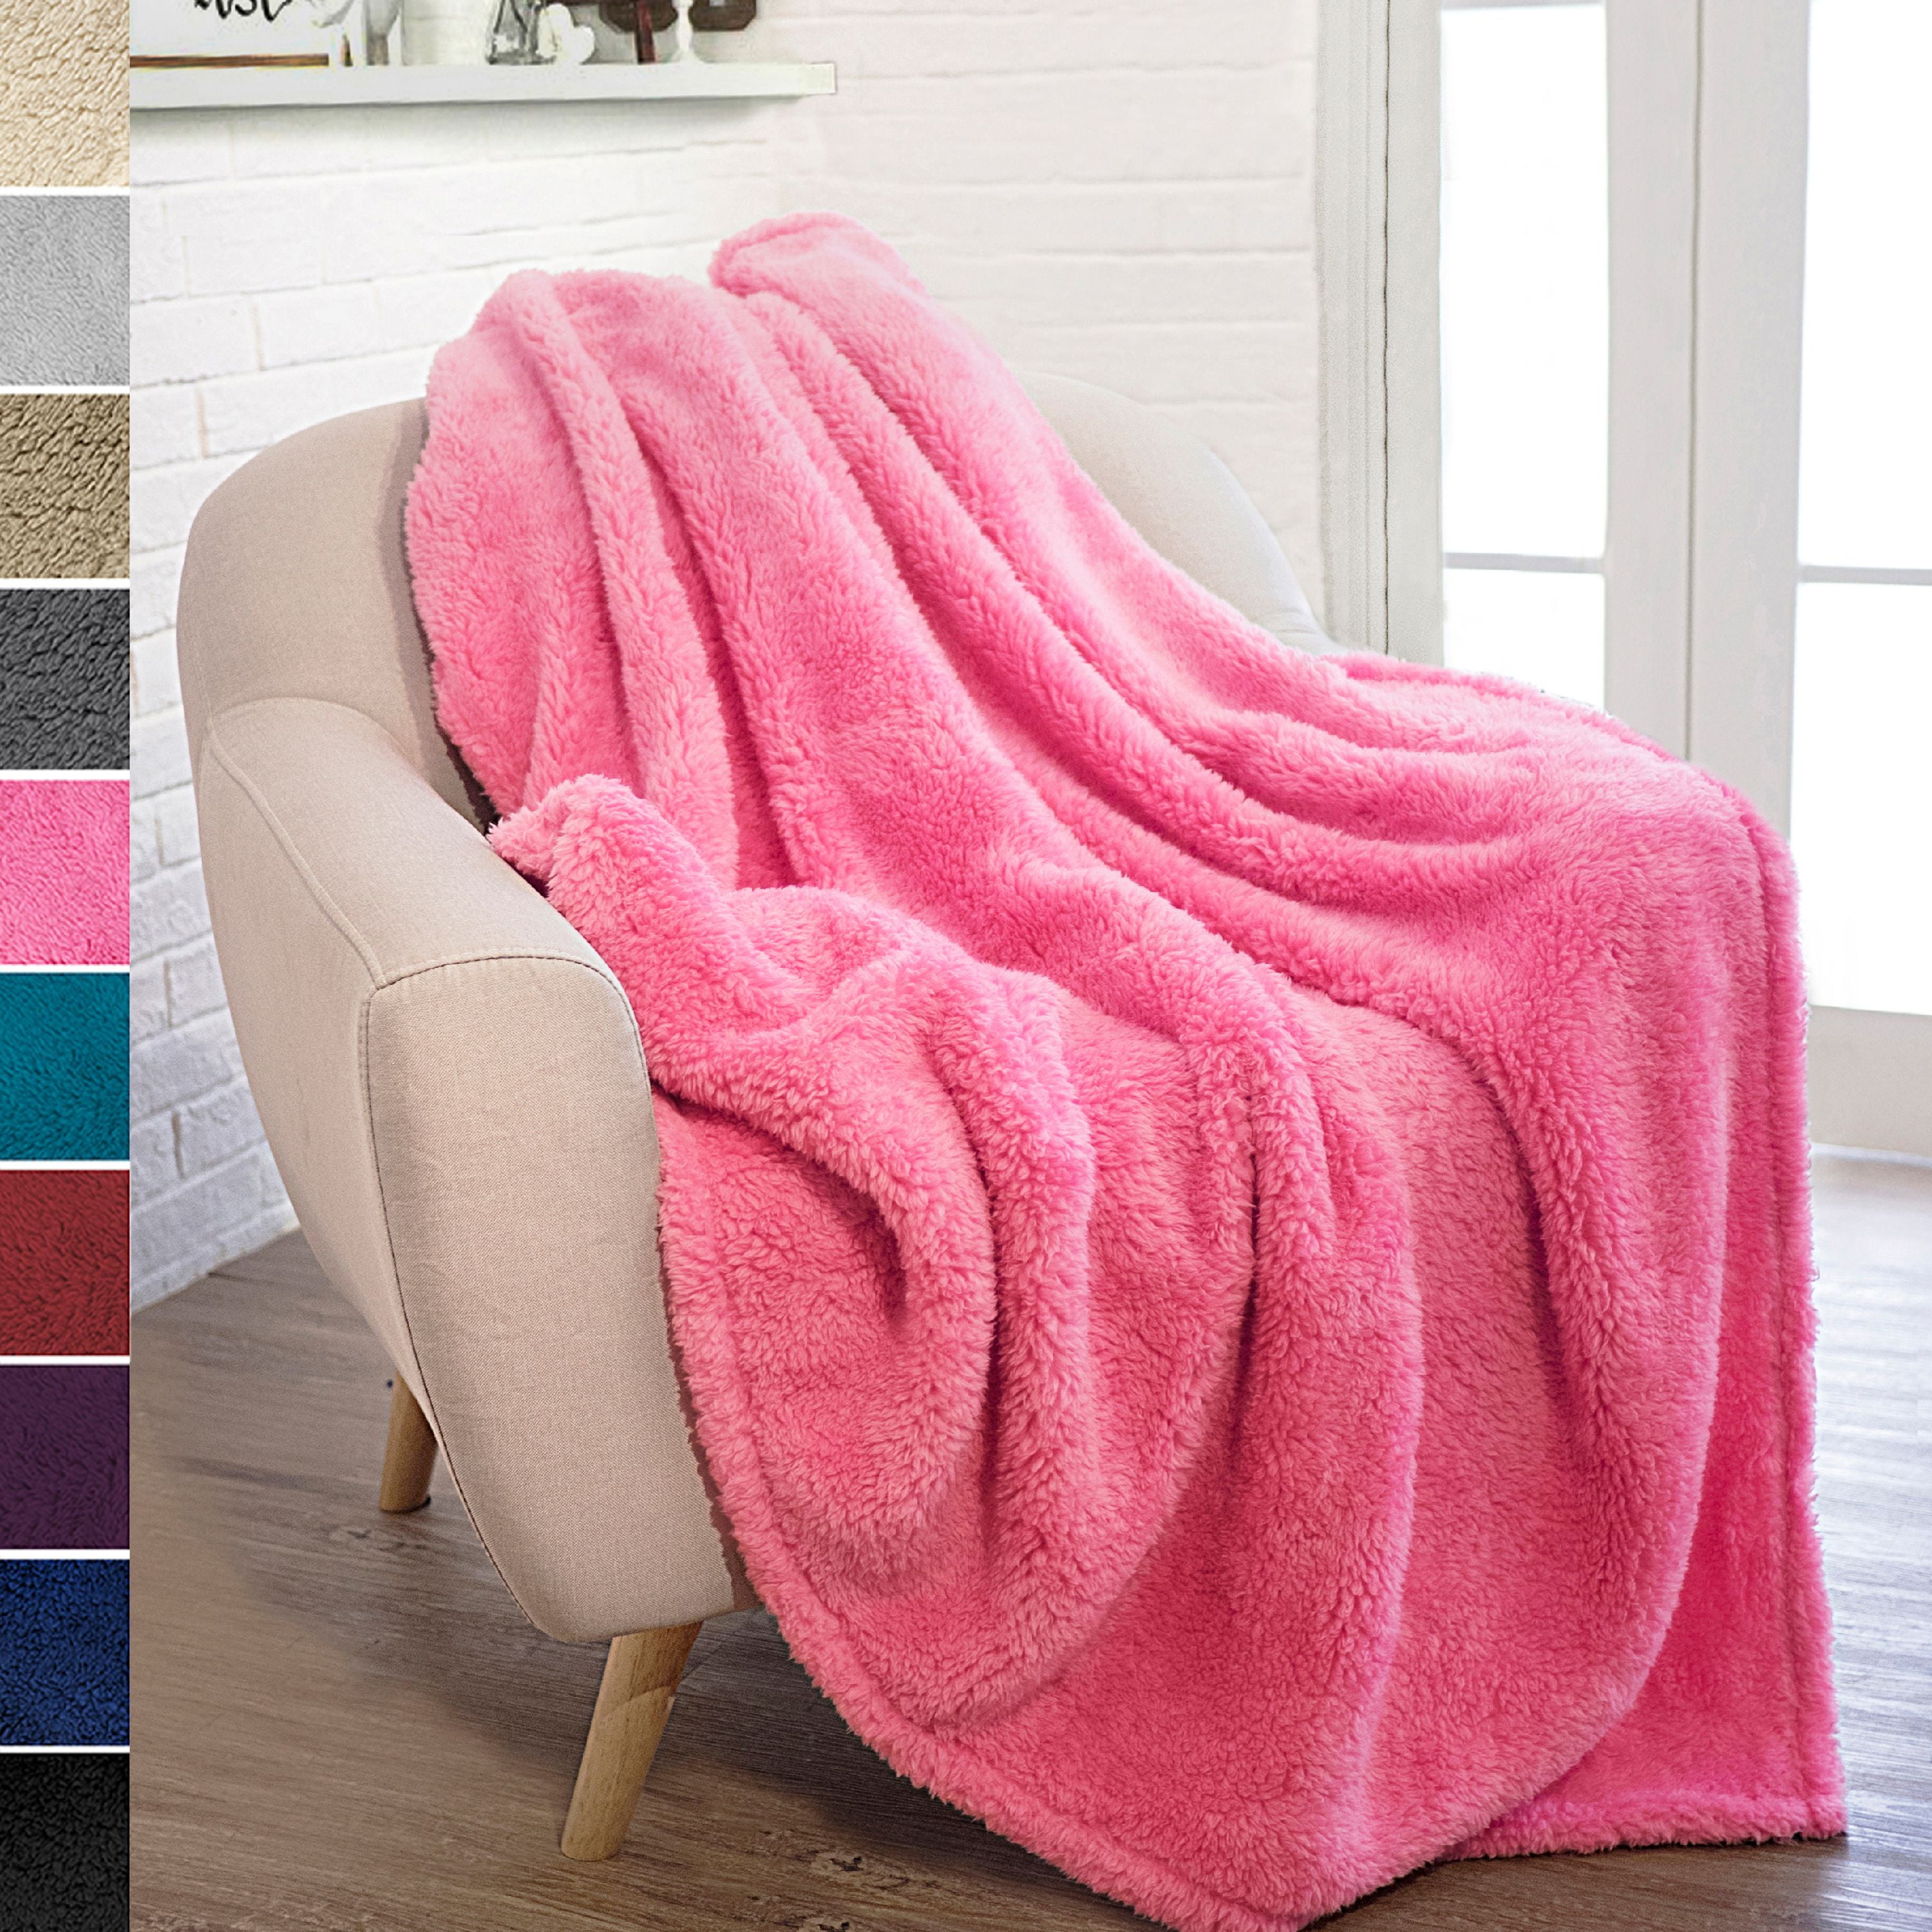 Xl SuperSoft Blush Fleece Throw Blanket Plush 220cm x 200cm Pale Pink Geometric 